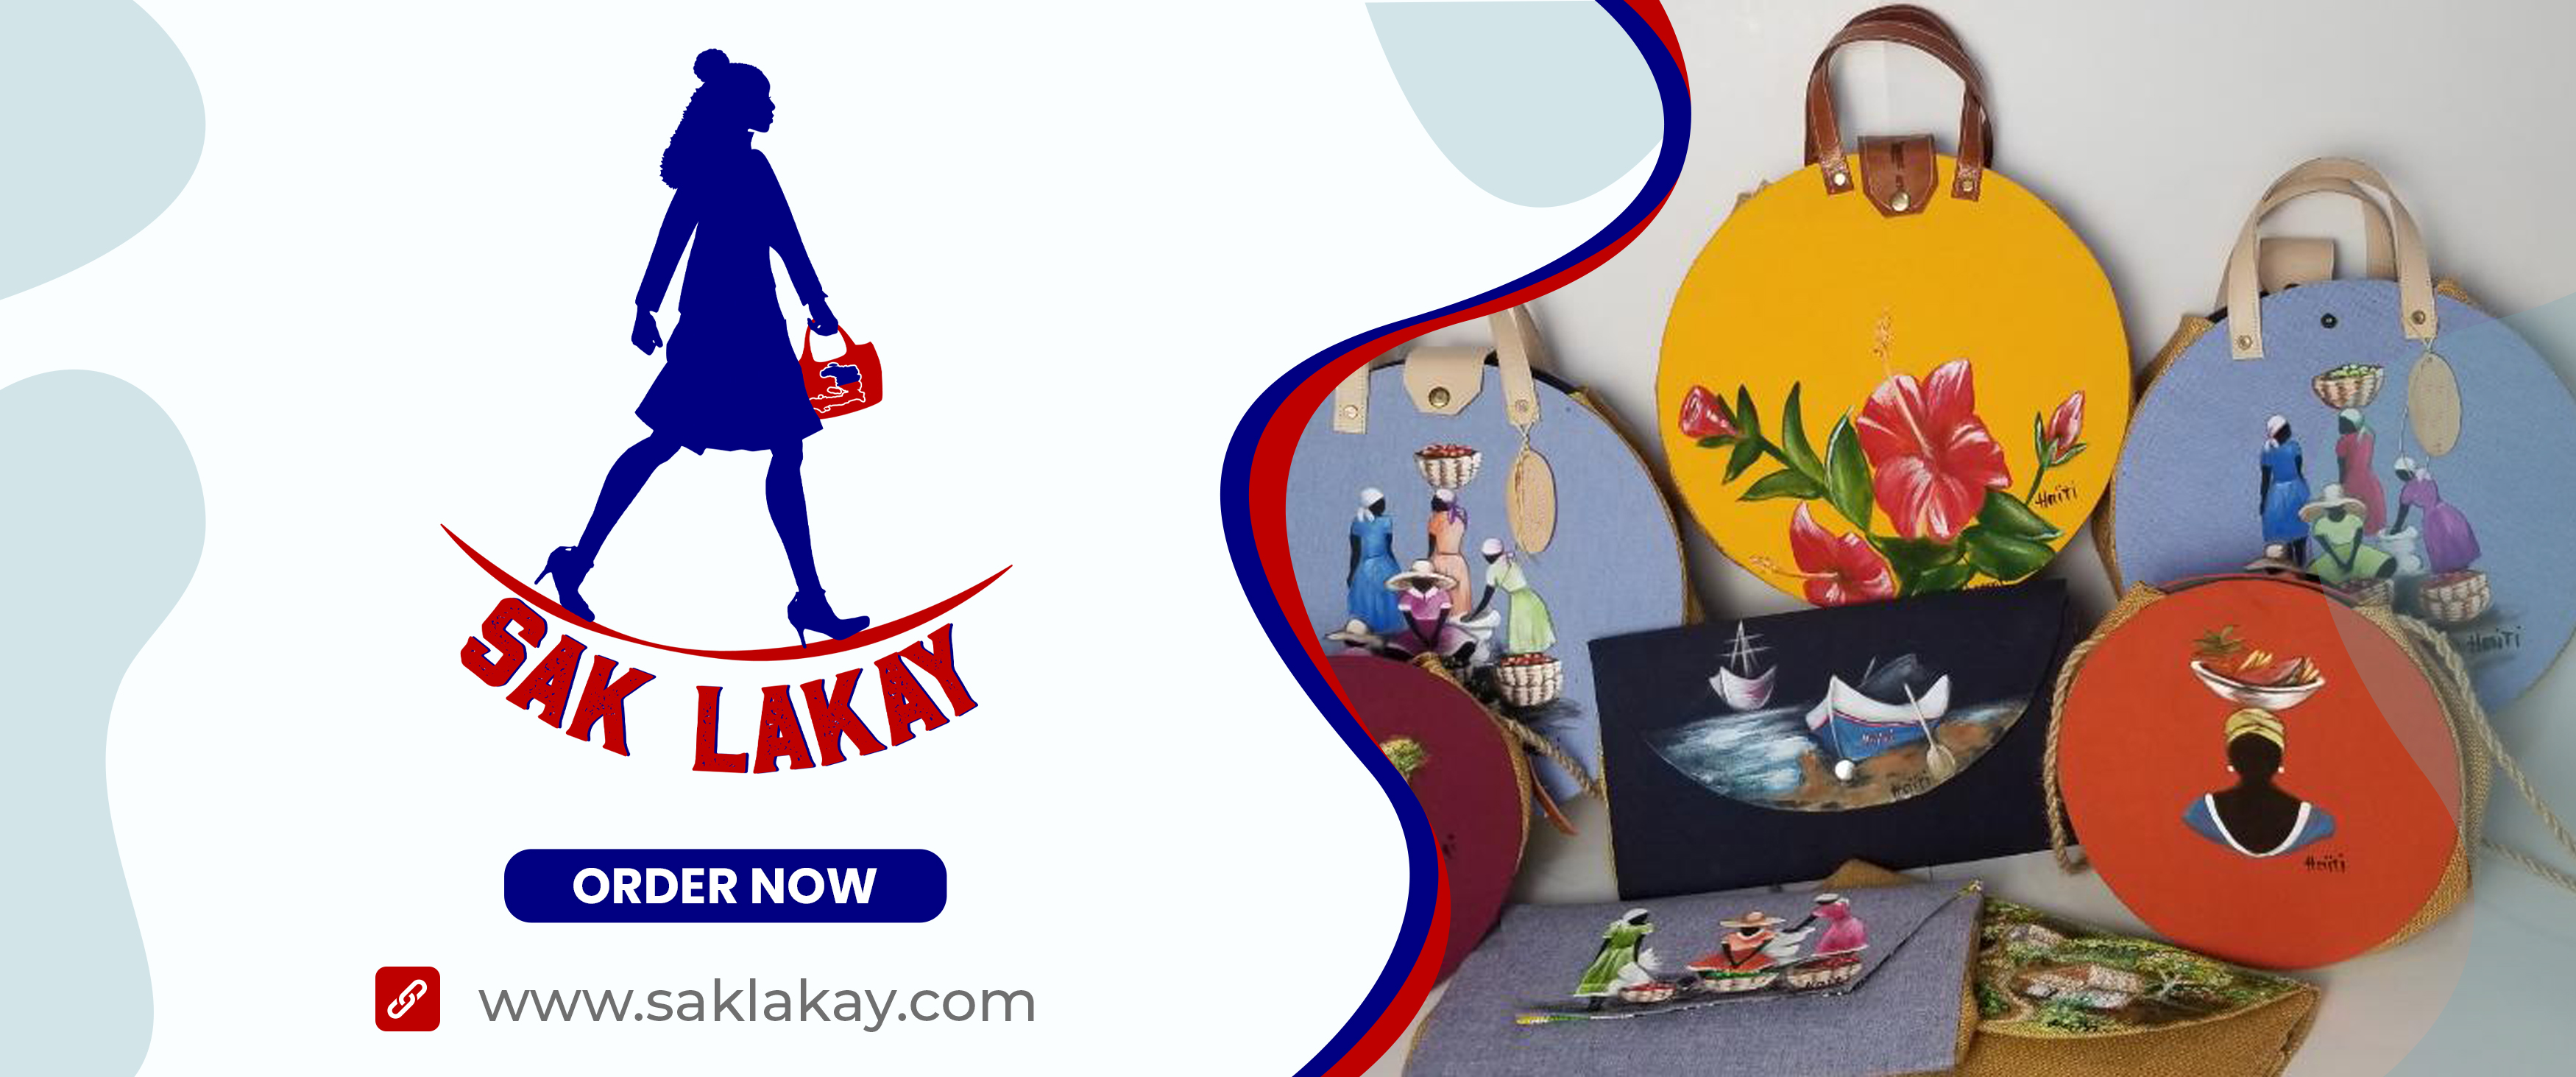 NAOSSOFT Develops Exciting New Website for Sak Lakay